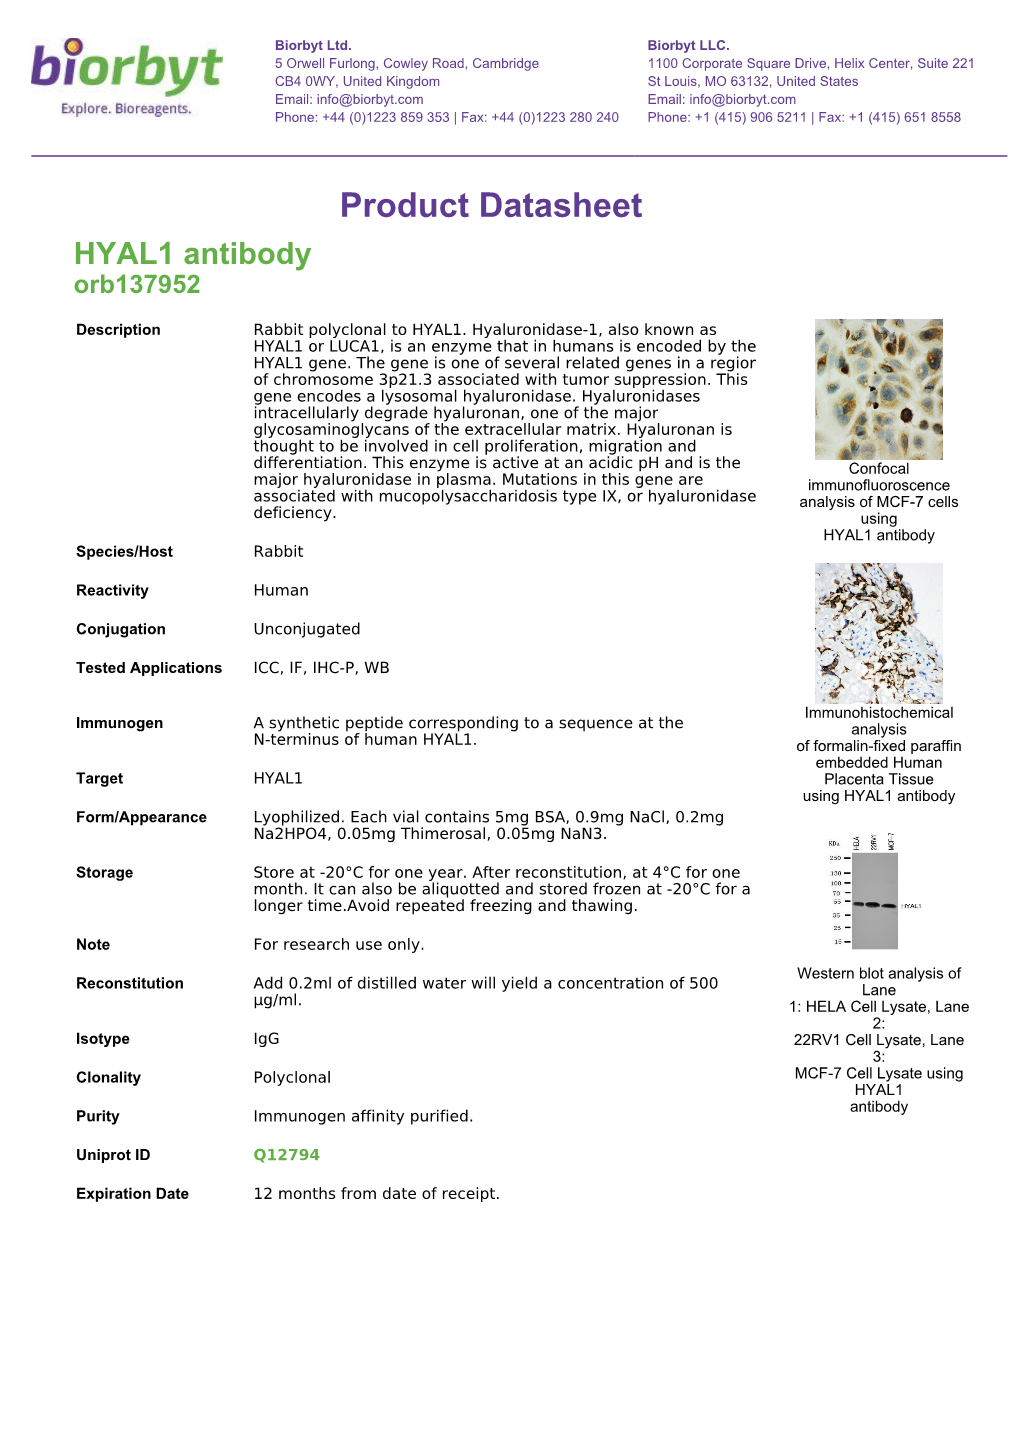 Product Datasheet HYAL1 Antibody Orb137952